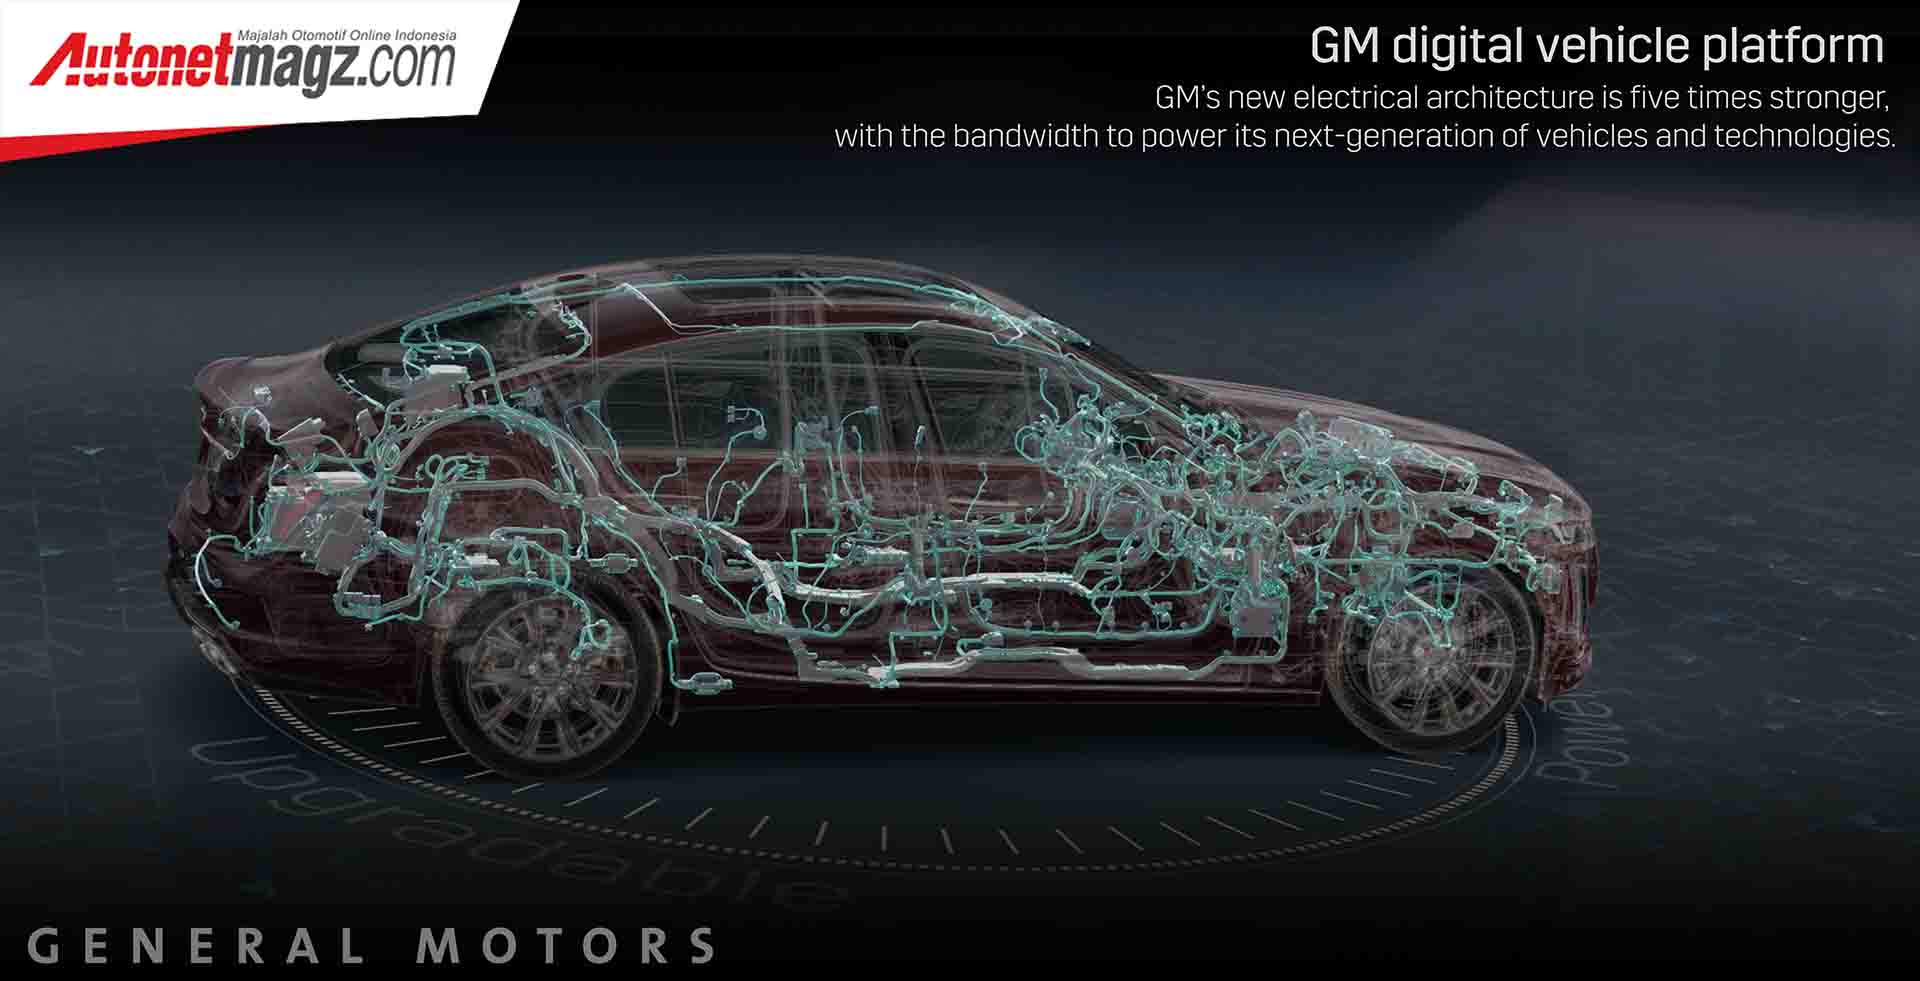 Berita, GM digital vehicle platform: GM Perkenalkan Platform Digital Untuk Kendaraan Masa Depannya!